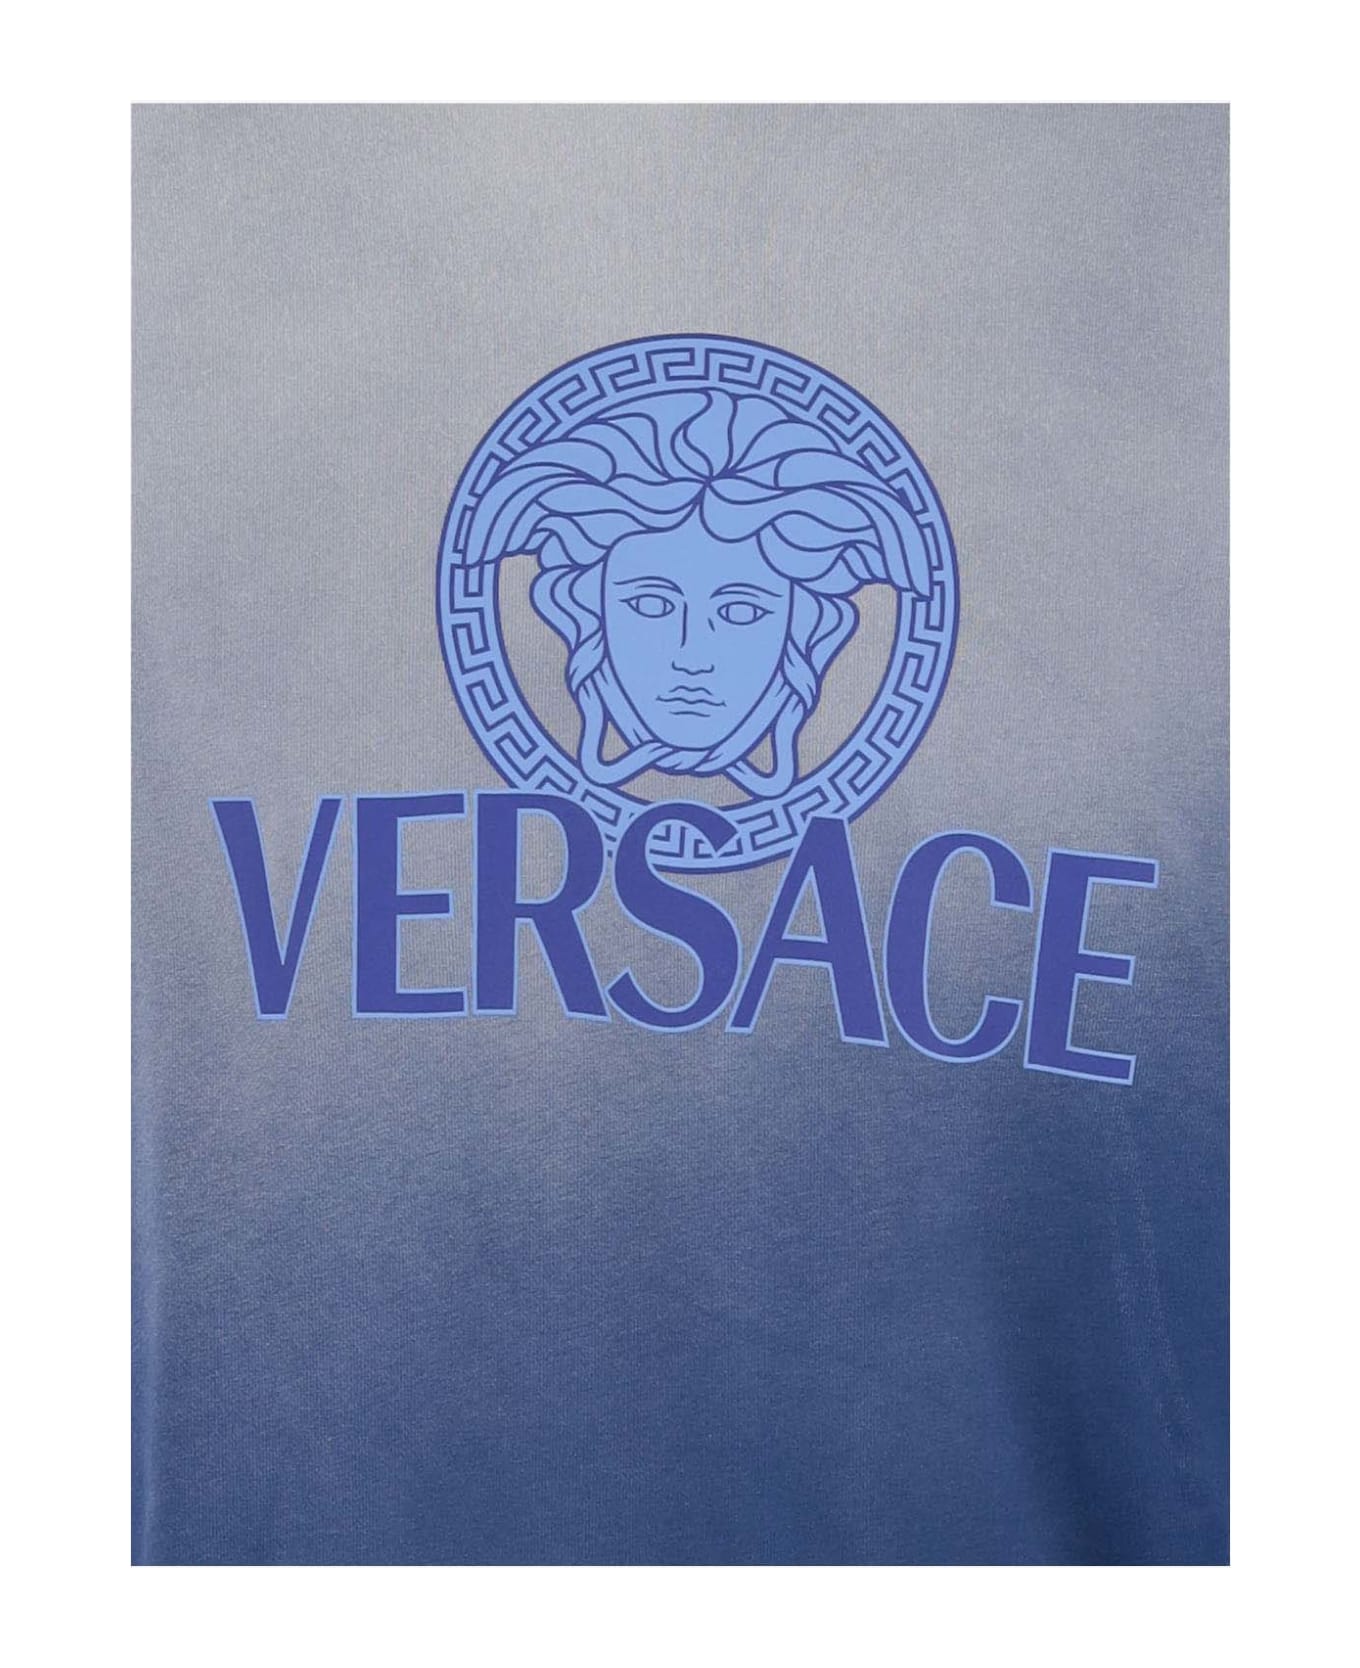 Versace Cotton Sweatshirt With Logo - Blue